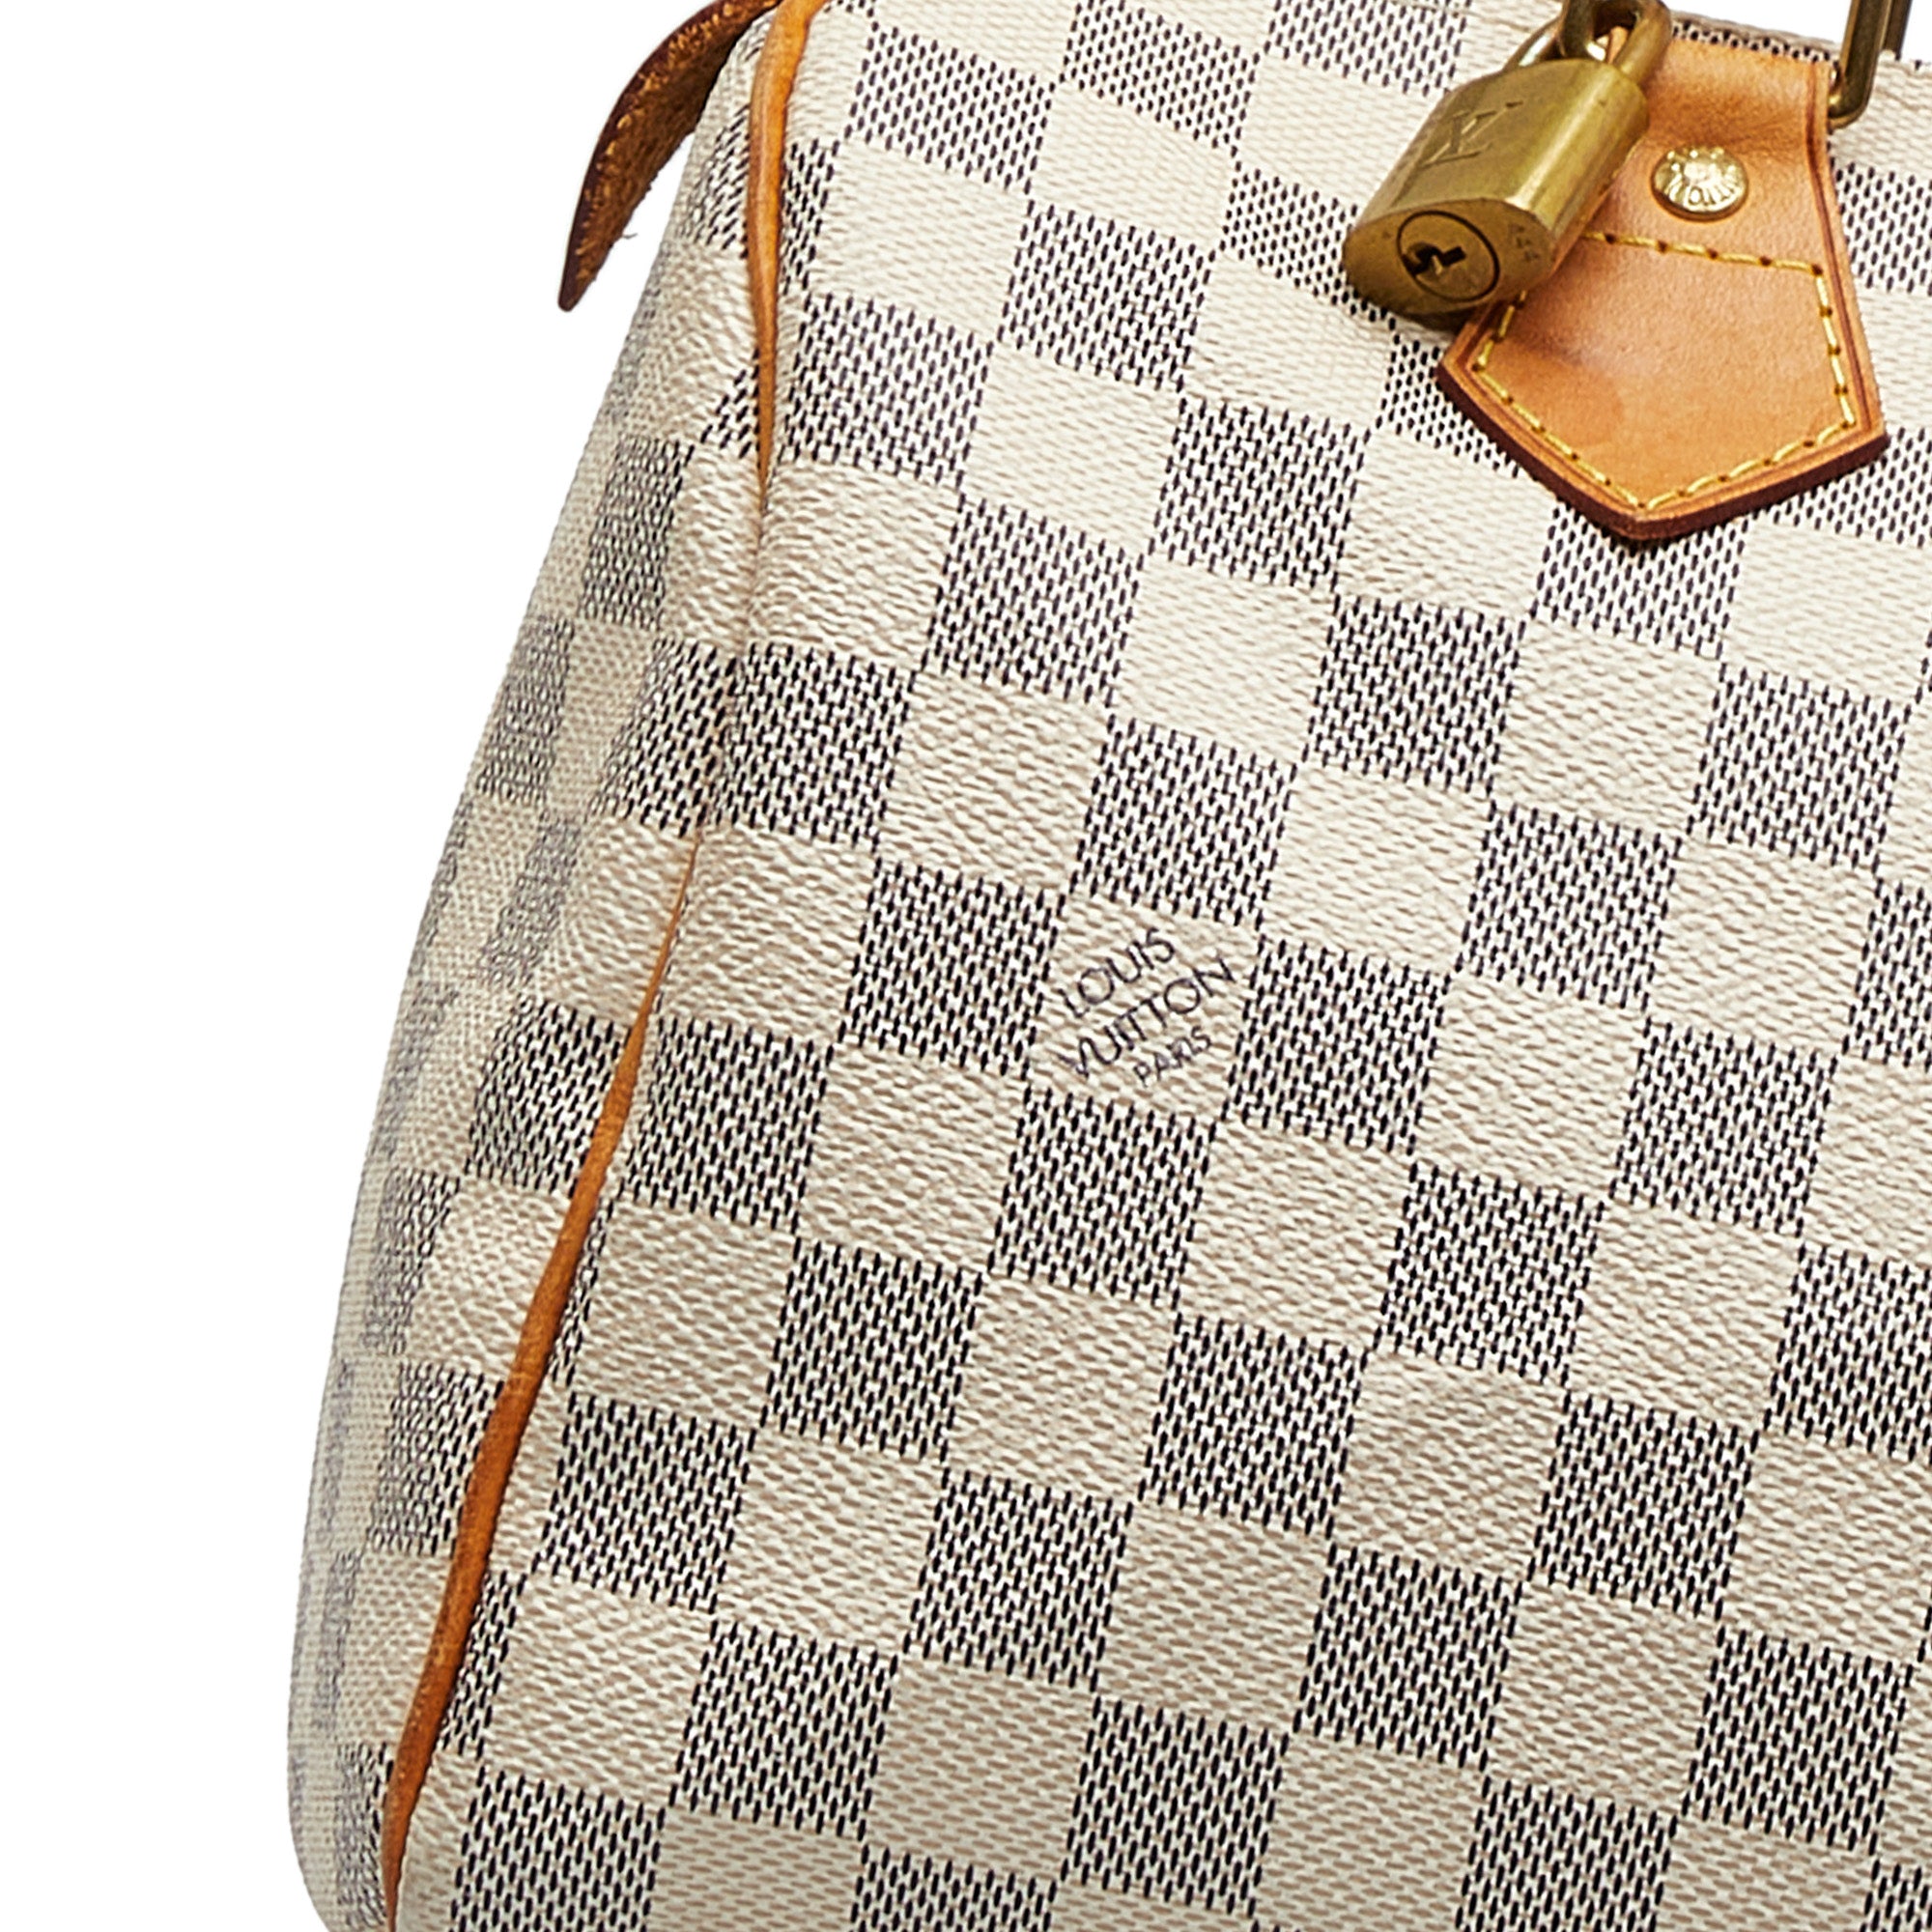 100% Authentic Louis Vuitton Damier Azur Speedy 25 Hand Bag